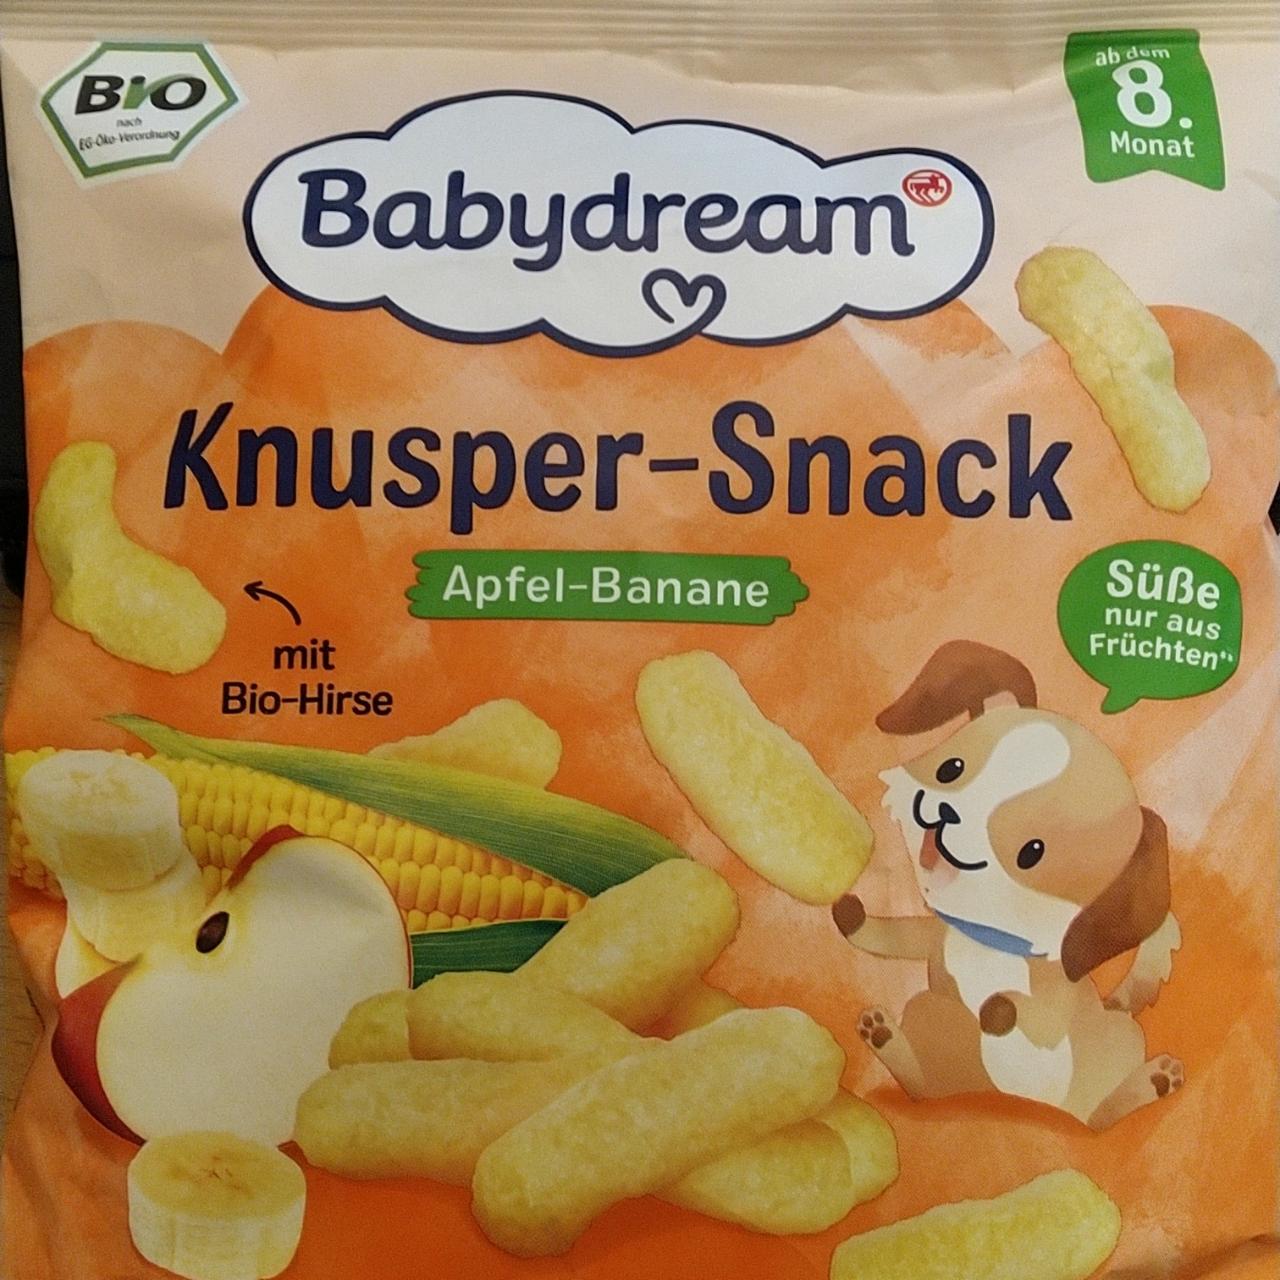 Fotografie - Knusper-Snack Apfel-Banane Babydream